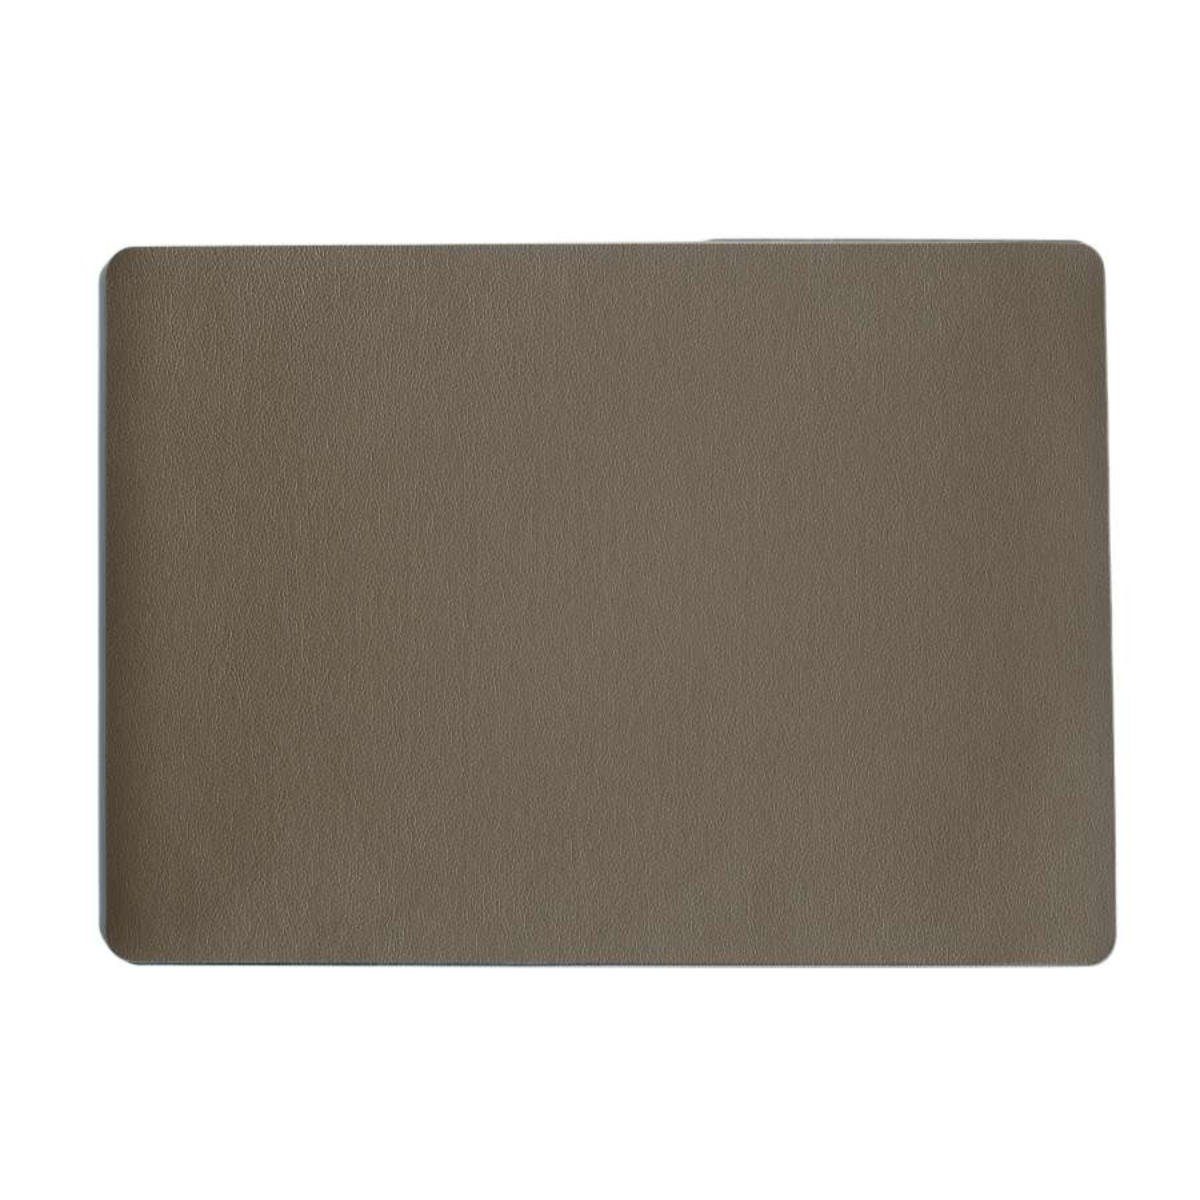 Platzset, Table Tops Leather Optic Fine, ASA SELECTION, 33x46 cm braun | Tischsets